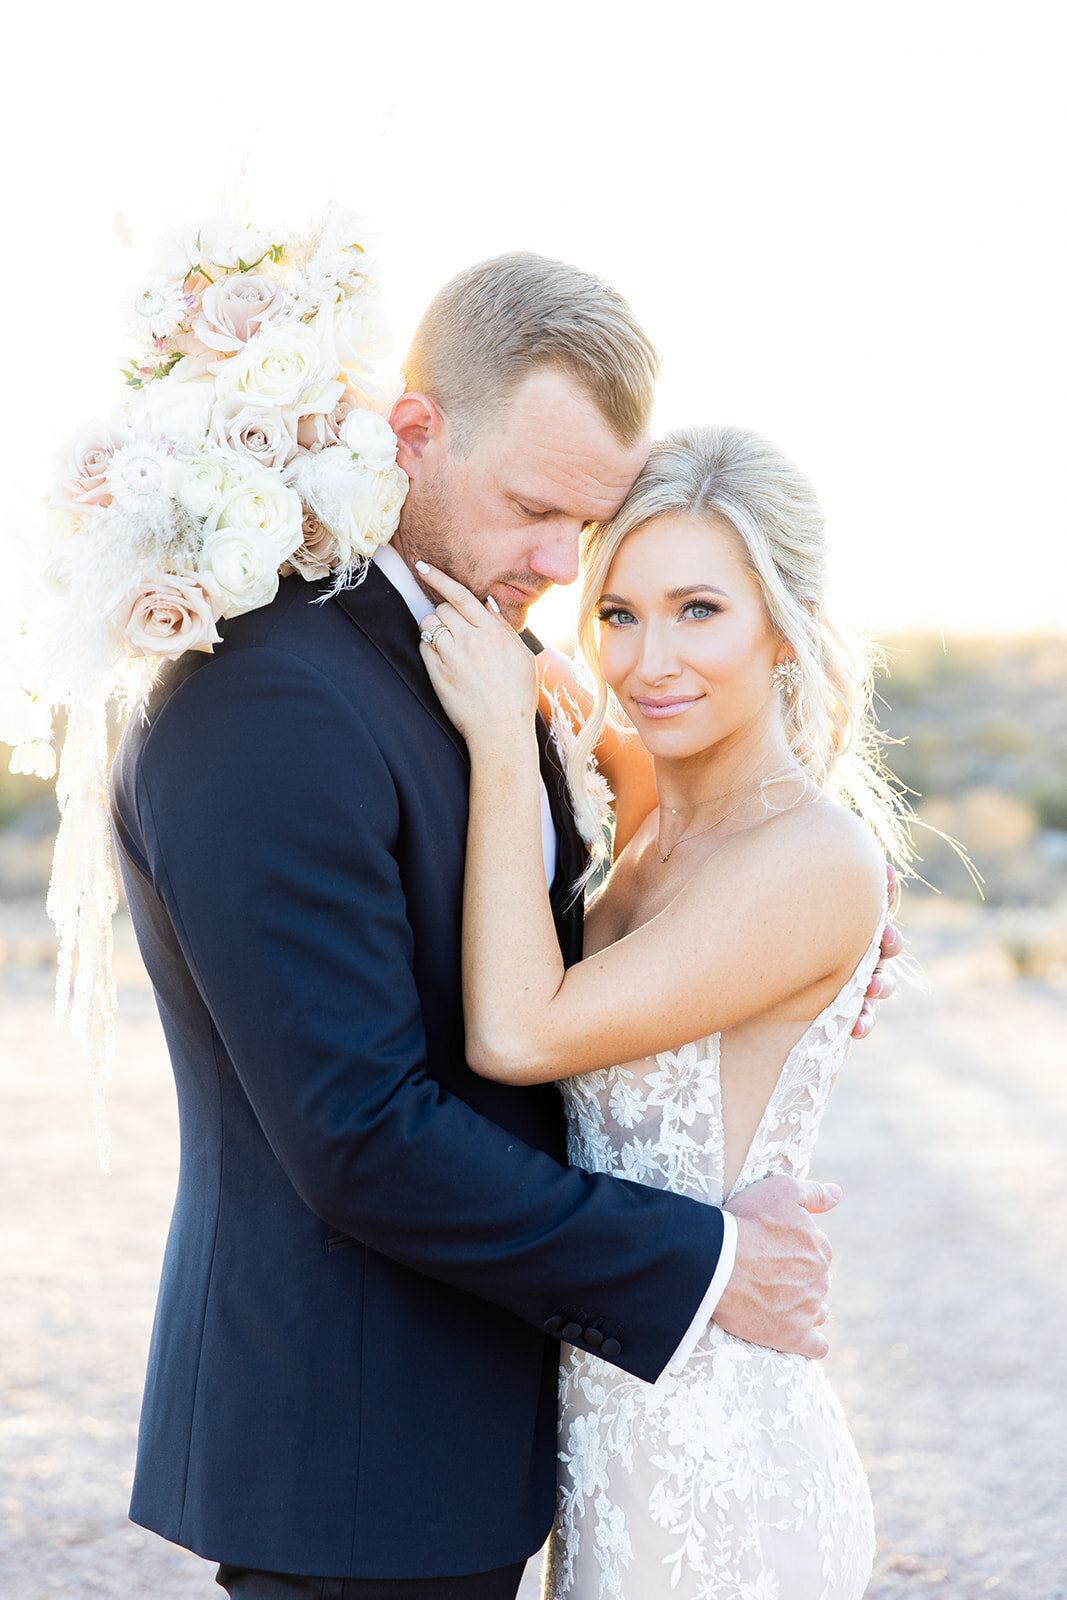 Karlie Colleen Photography - Ashley & Grant Wedding - The Paseo - Phoenix Arizona-822